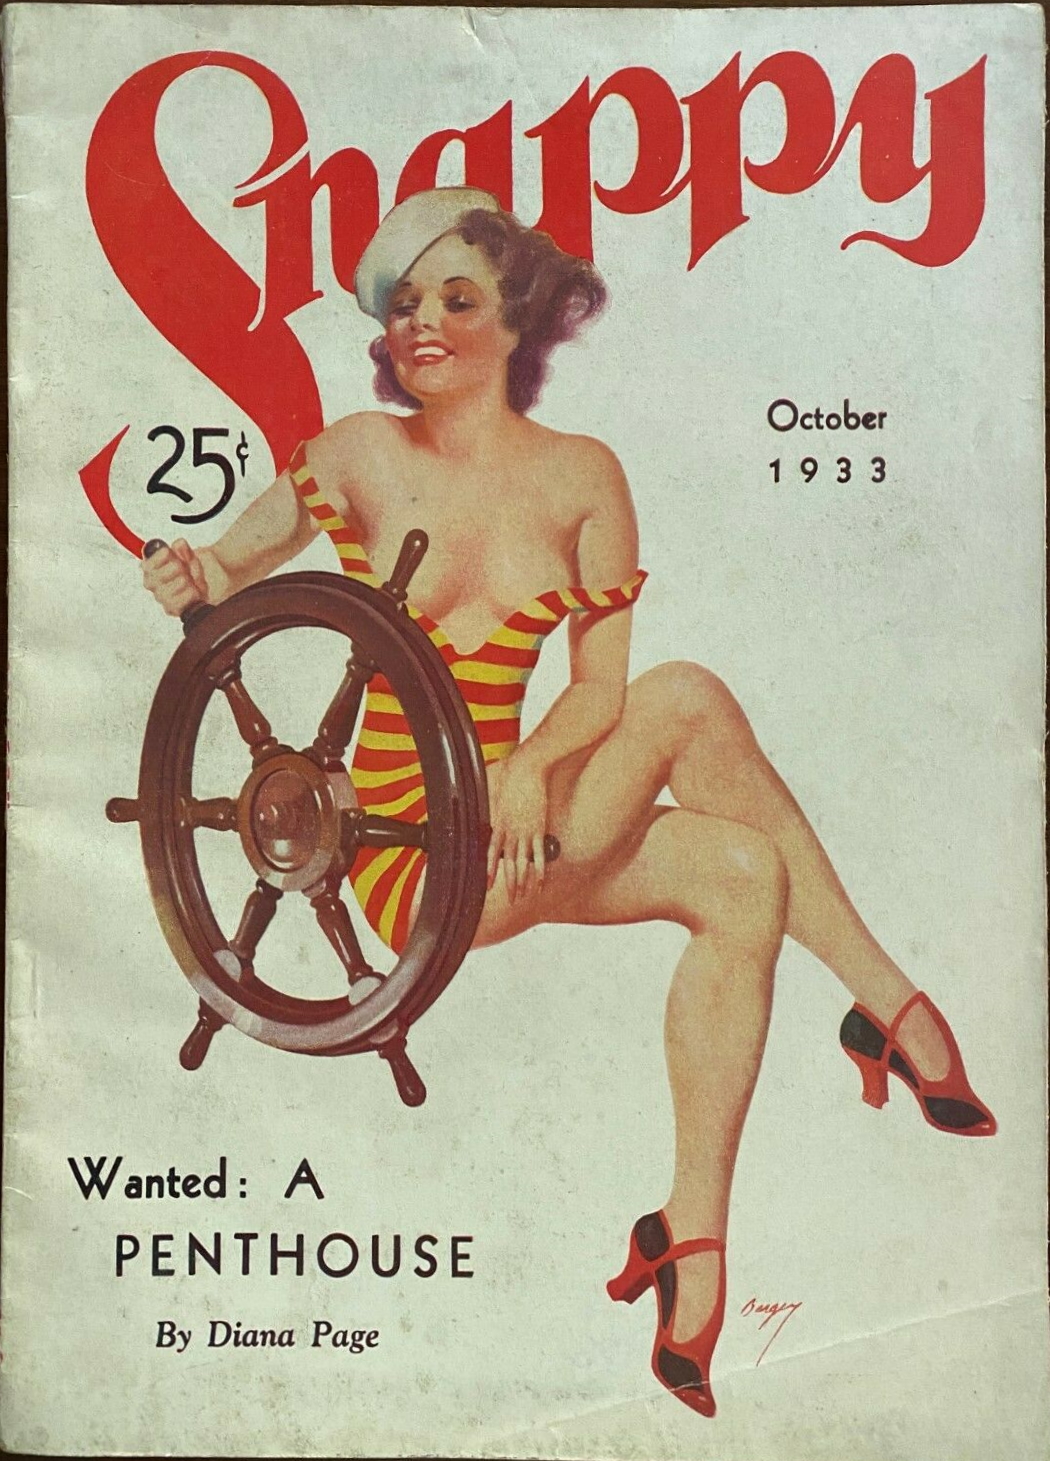 Snappy - October 1933